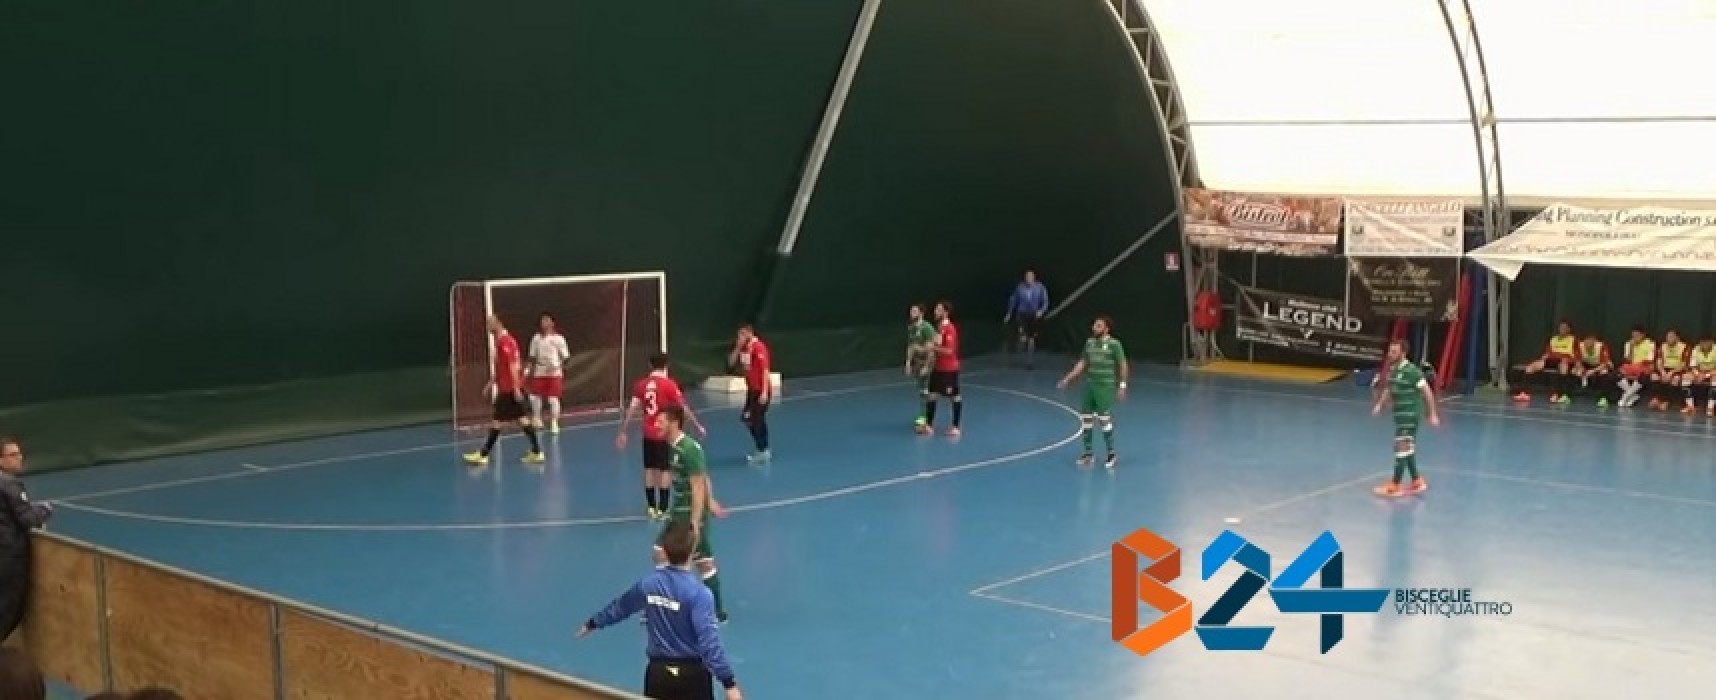 Futsal Club-Diaz 0-1 / VIDEO HIGHLIGHTS